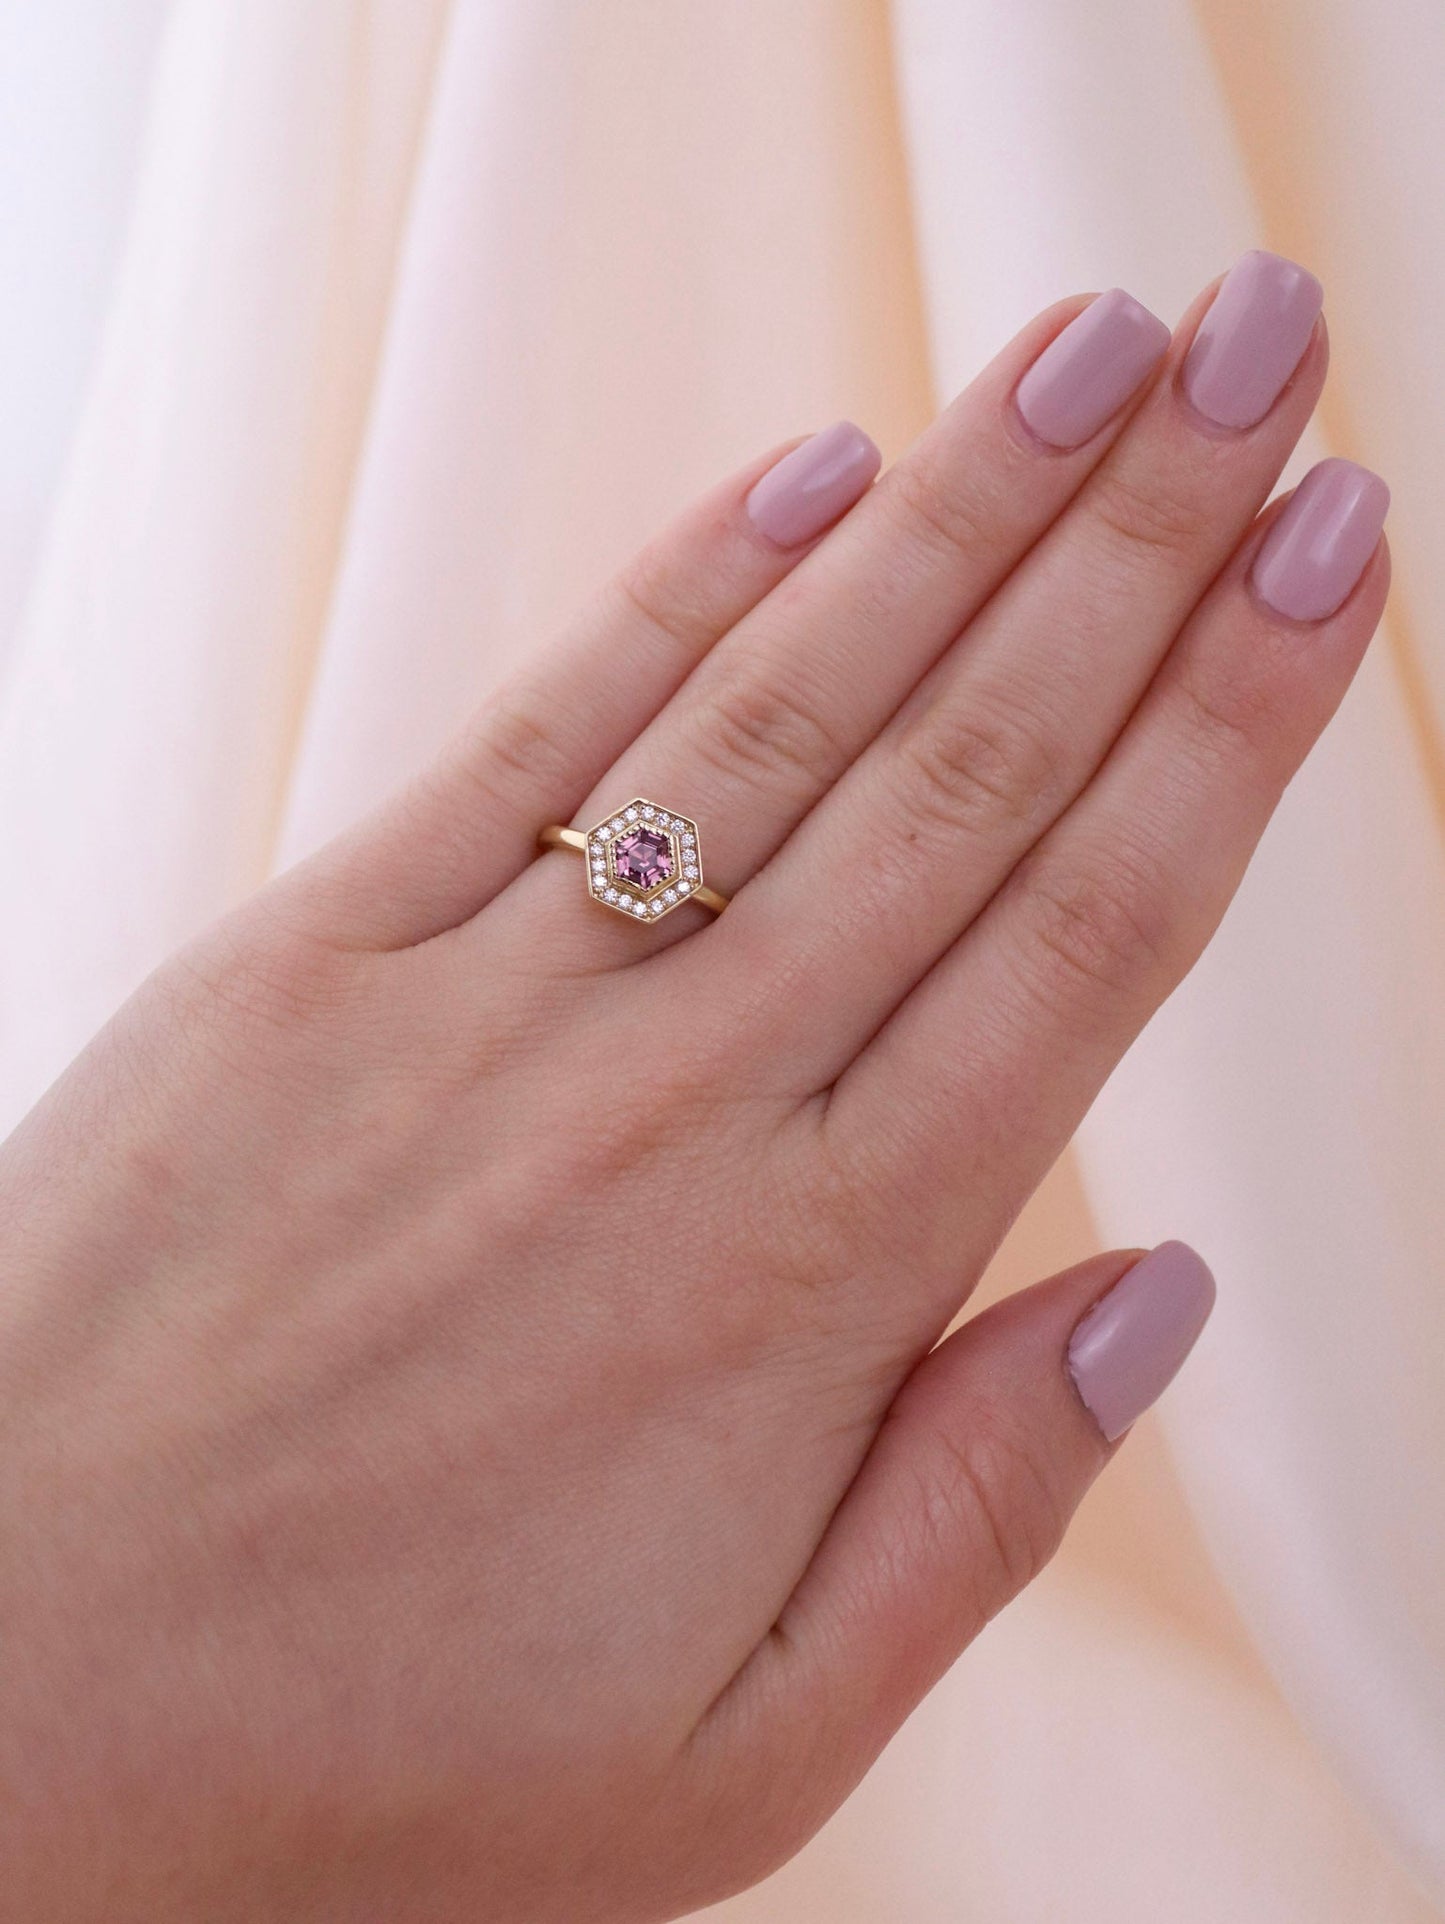 Hexagonal Pink Sapphire Ring - Kingdom Jewelry